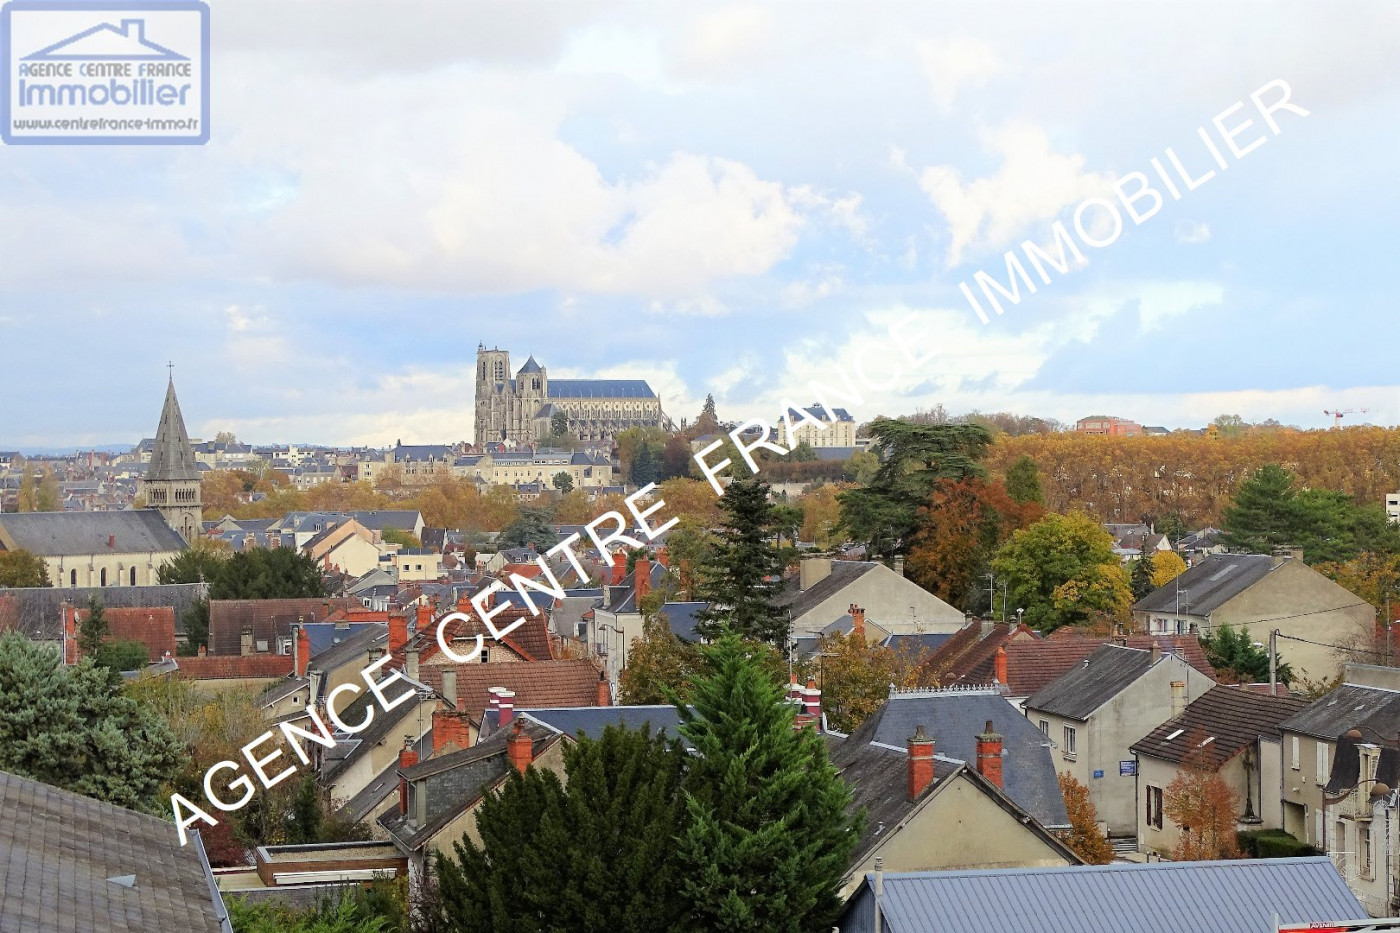 A vendre  Bourges | Réf 030011558 - Agence centre france immobilier